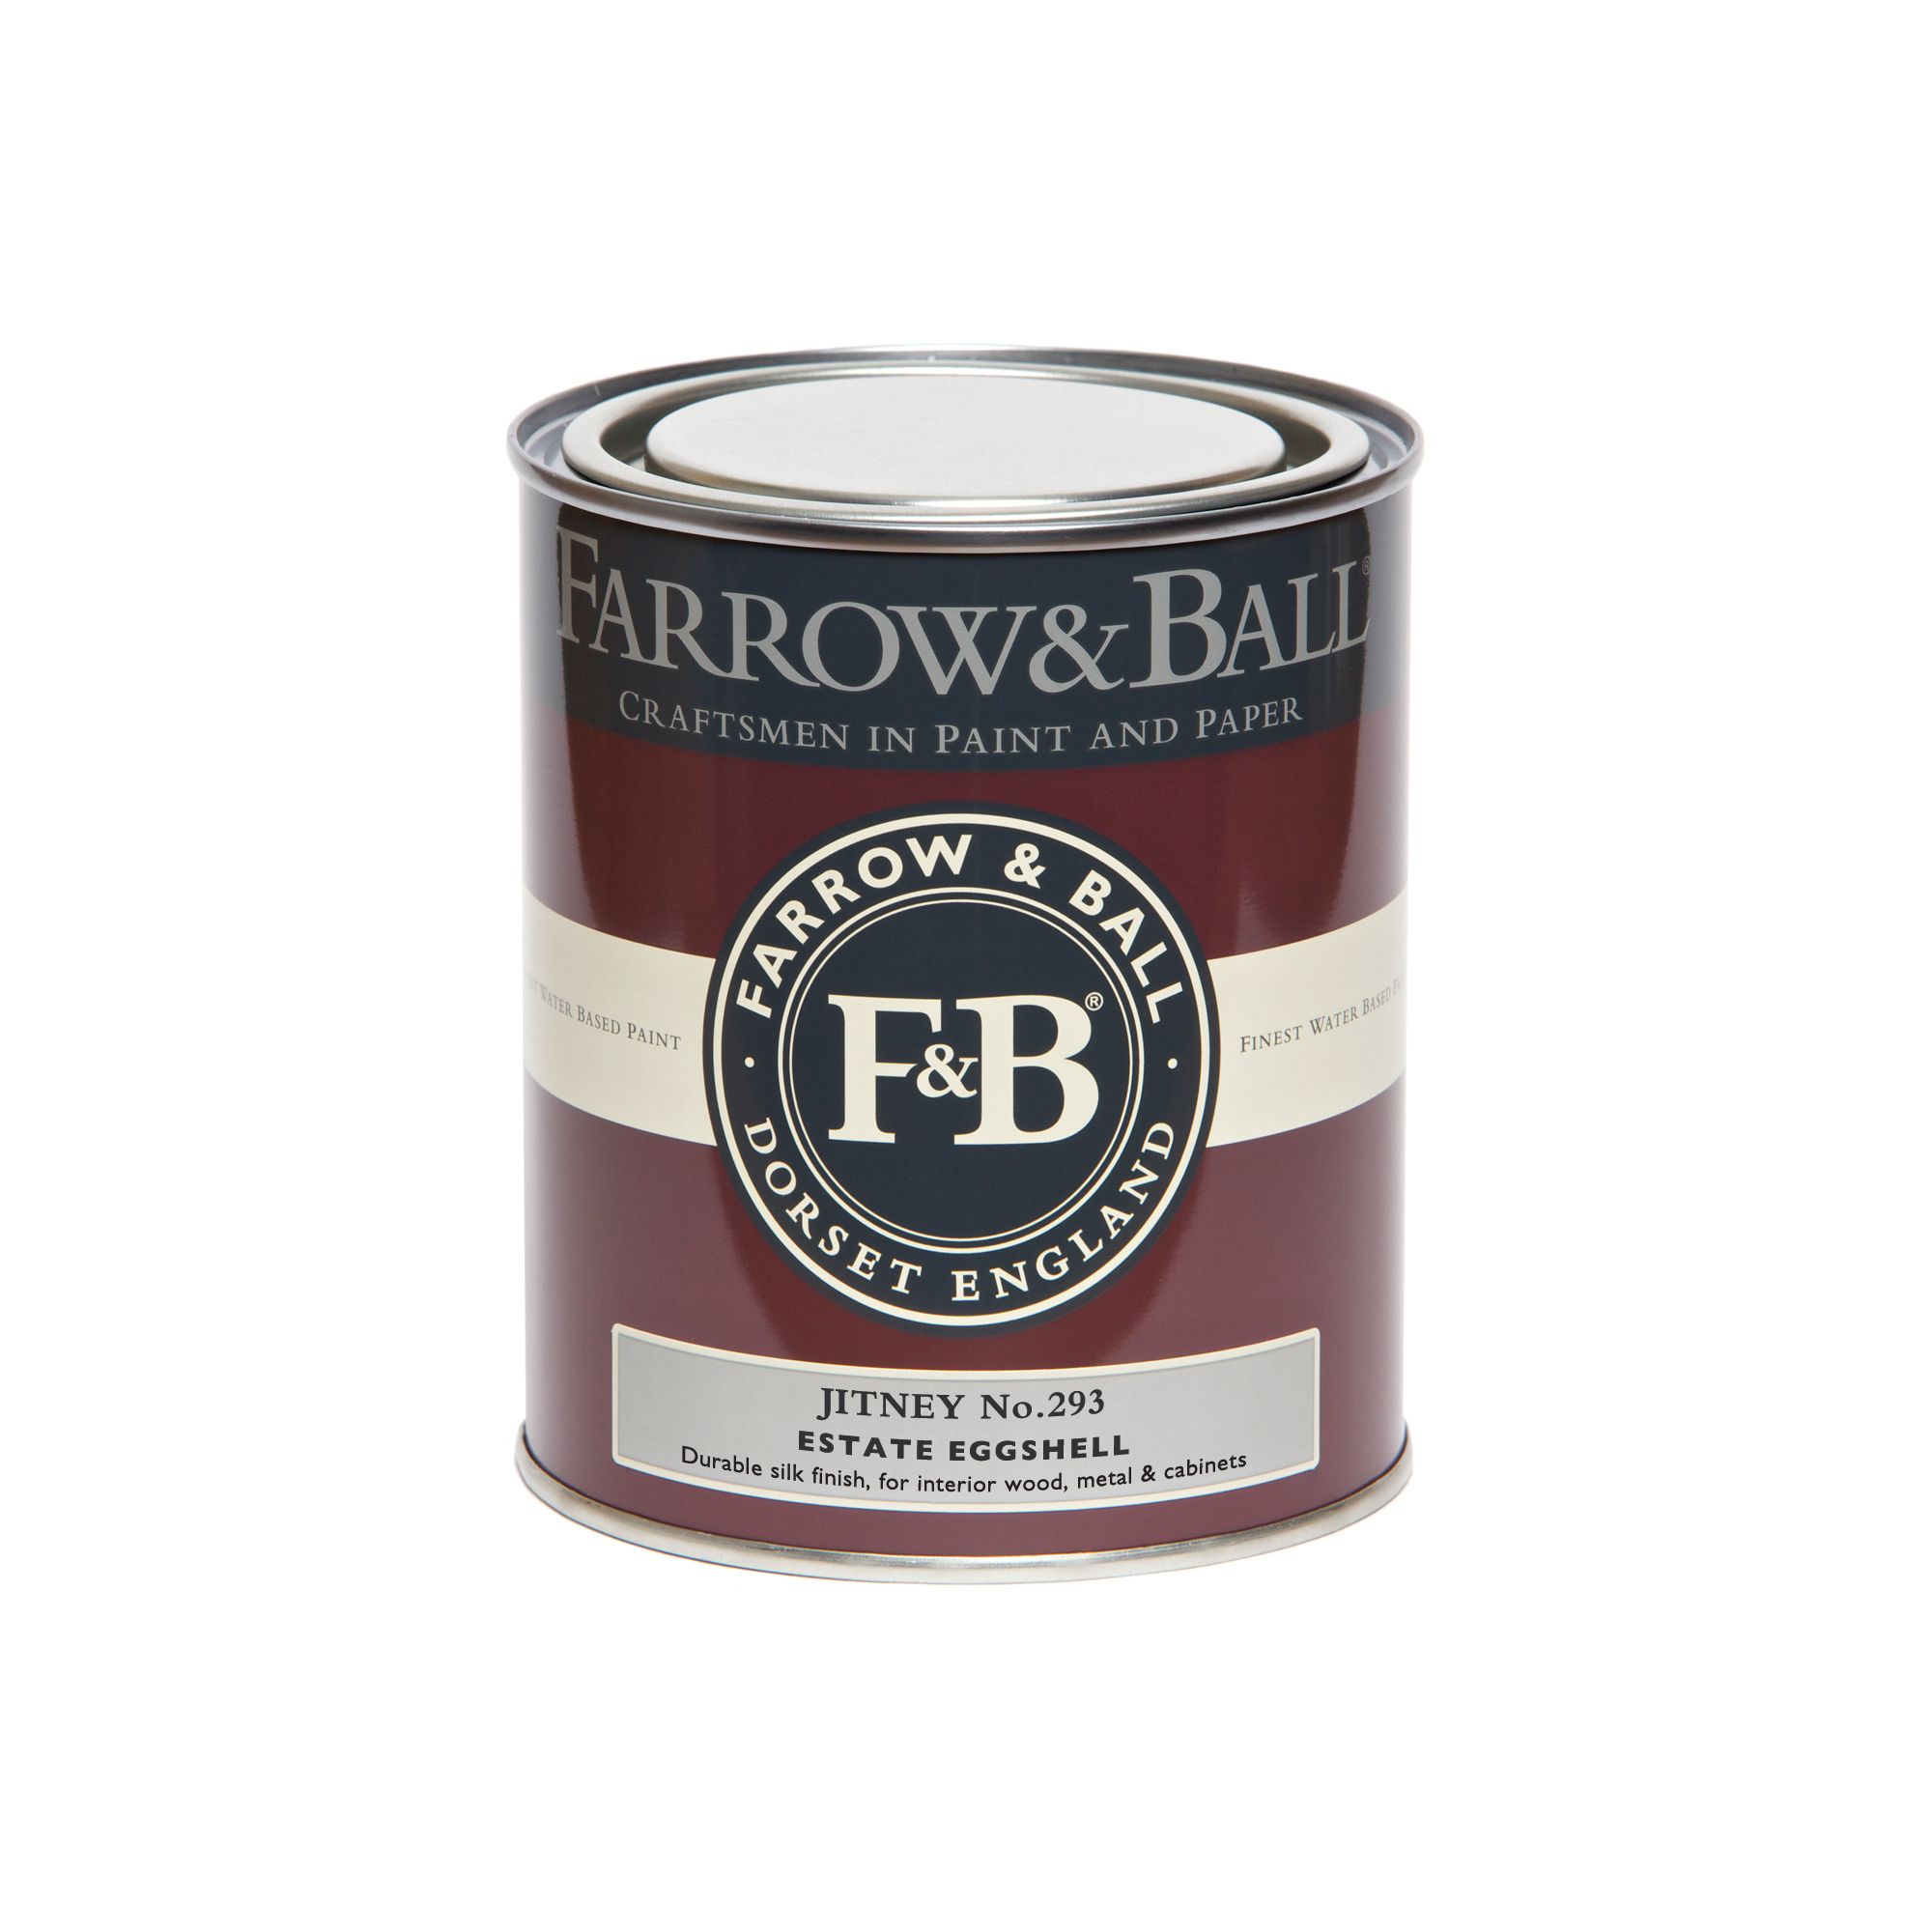 Farrow & Ball Estate Jitney No.293 Eggshell Metal & wood paint, 750ml